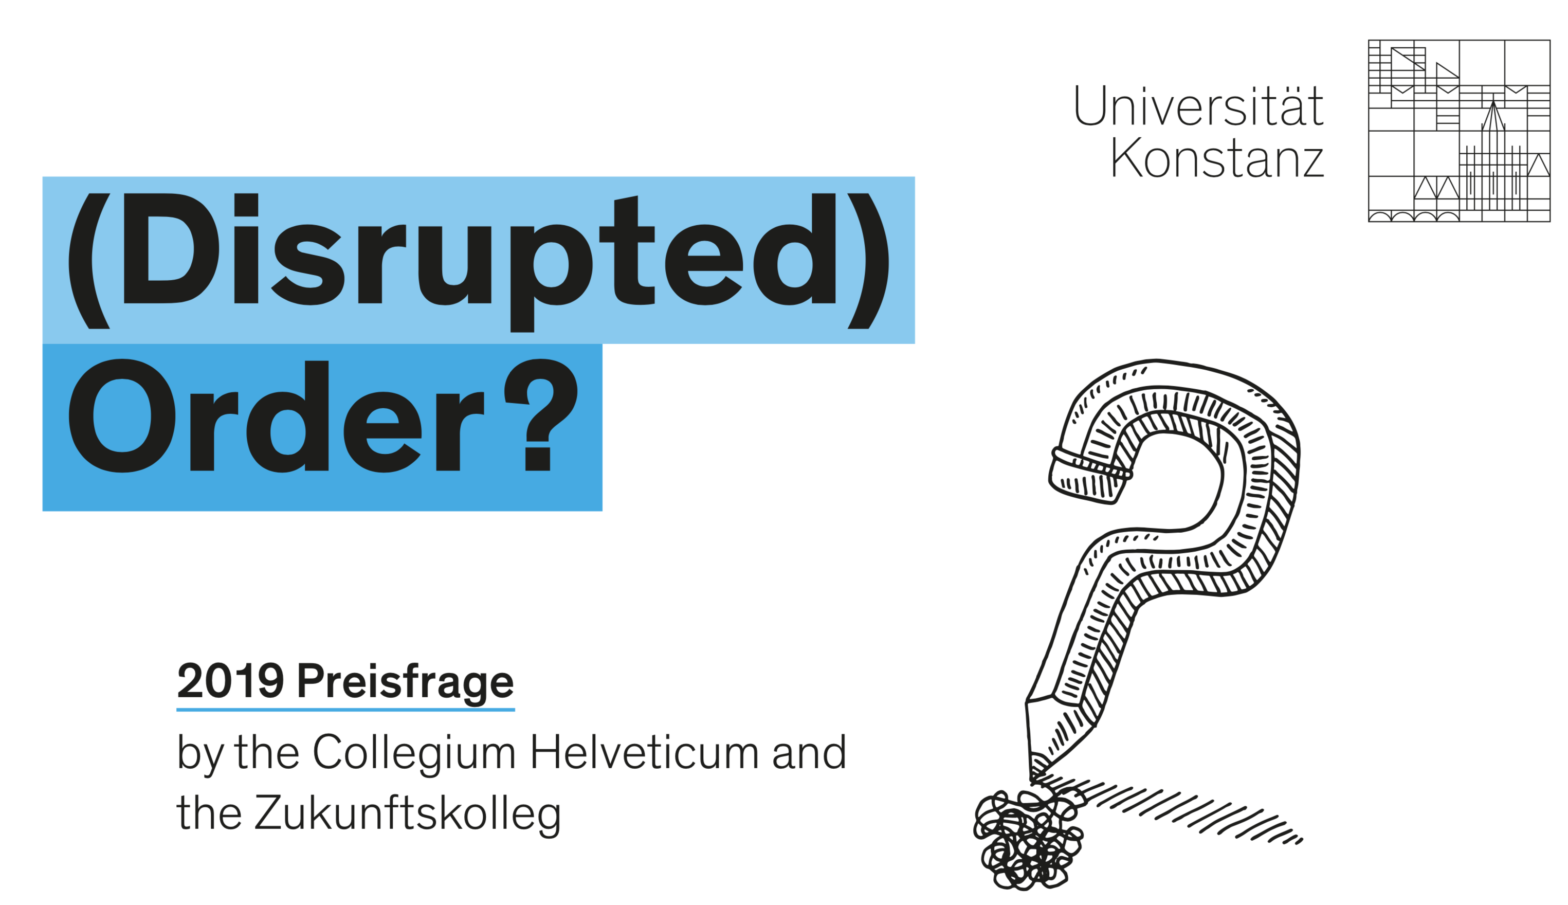 Flyer of 2019 Preisfrage by the Collegium Helveticum and the Zukunftskolleg